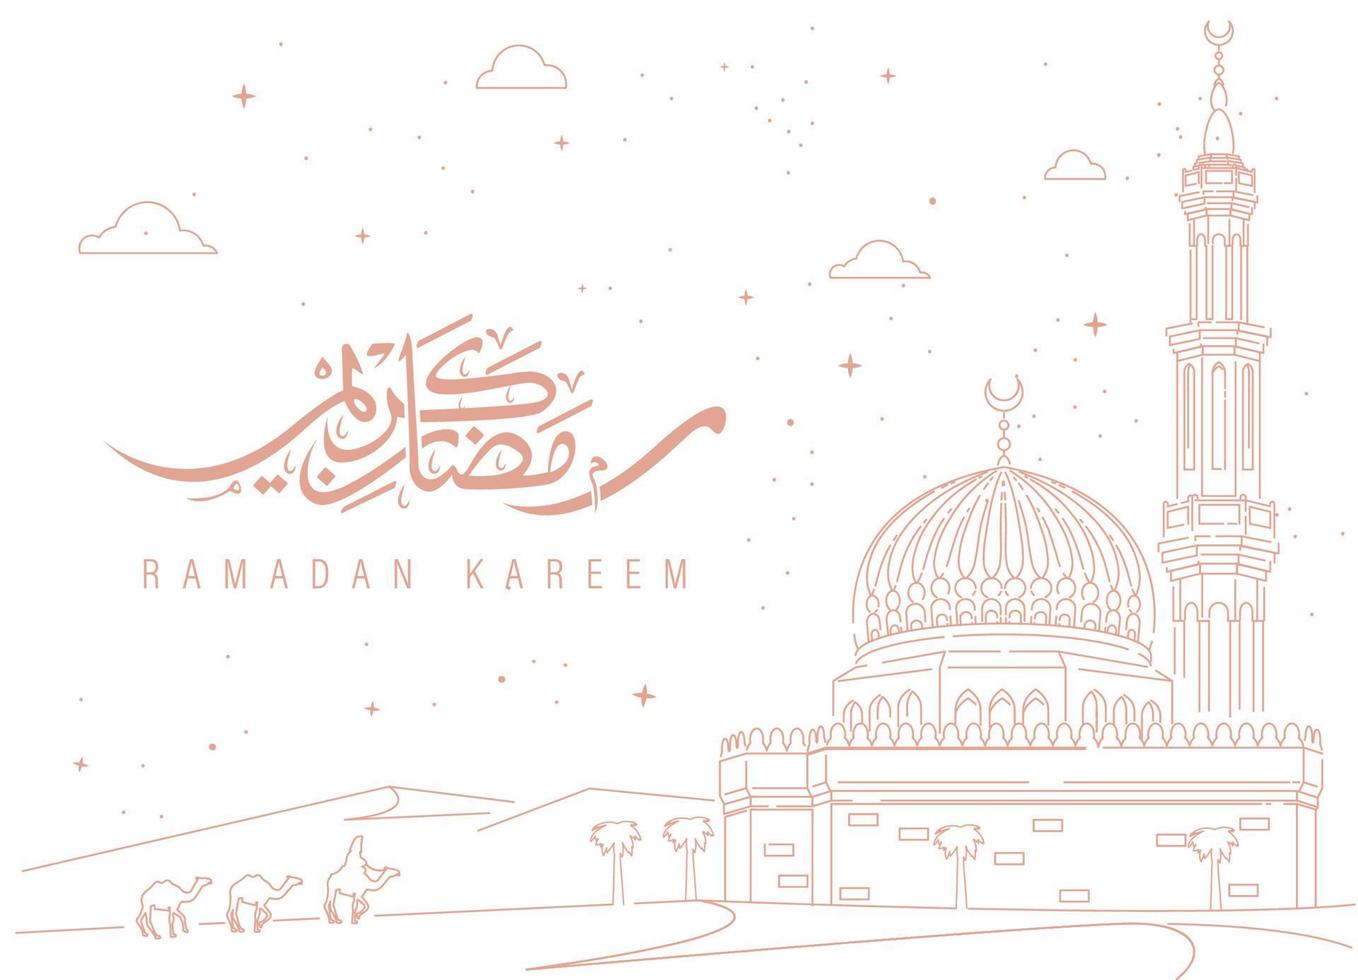 Ramadan Kareem greeting banner design with mosque line art on grunge background Vector illustration